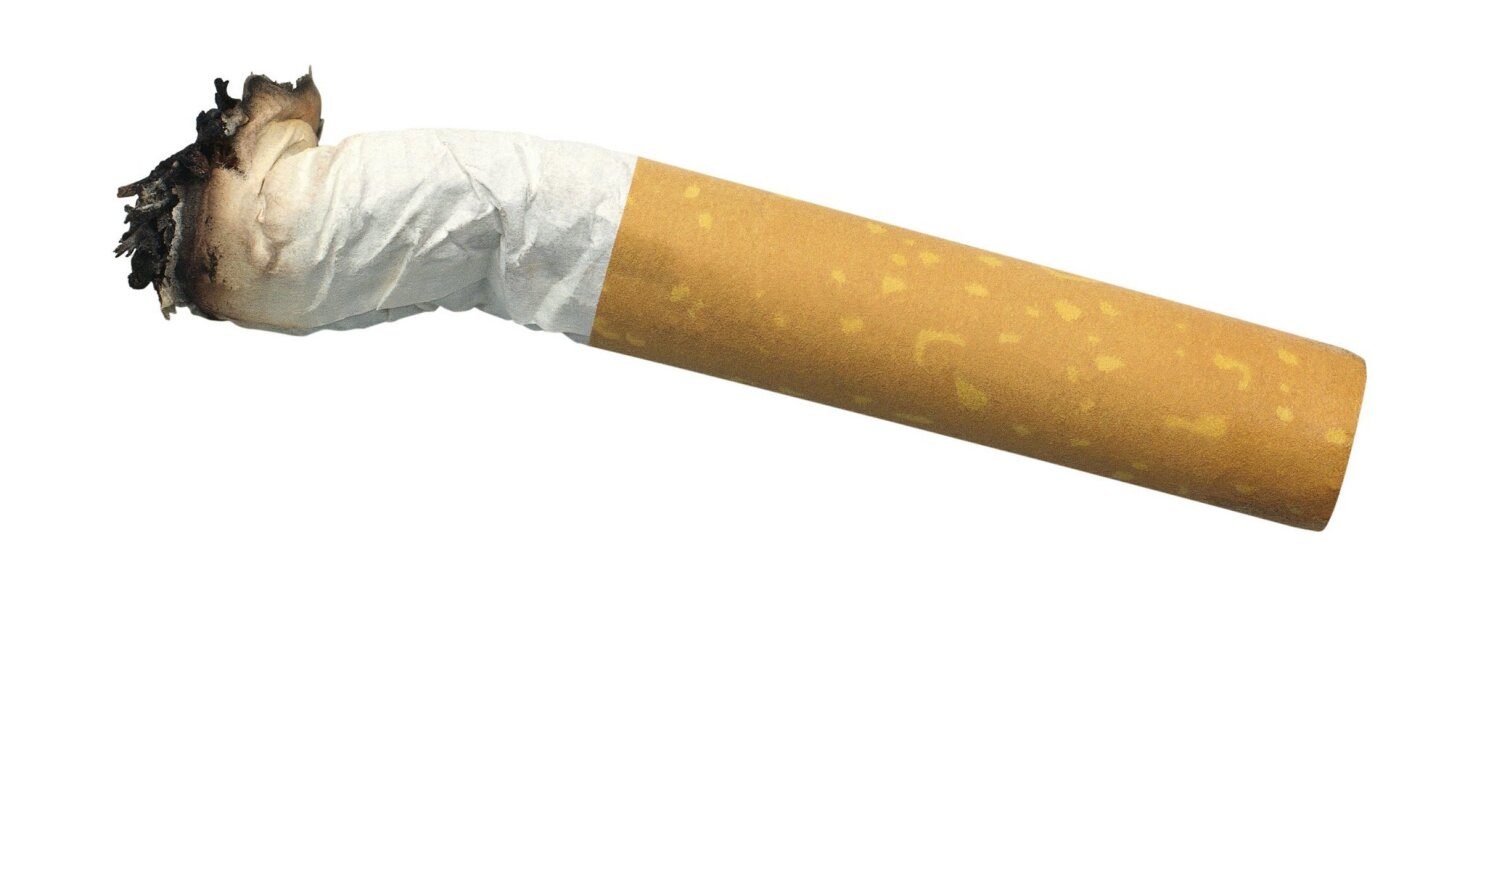 Escondido To Make New Anti Smoking And Vaping Laws The San Diego Union Tribune